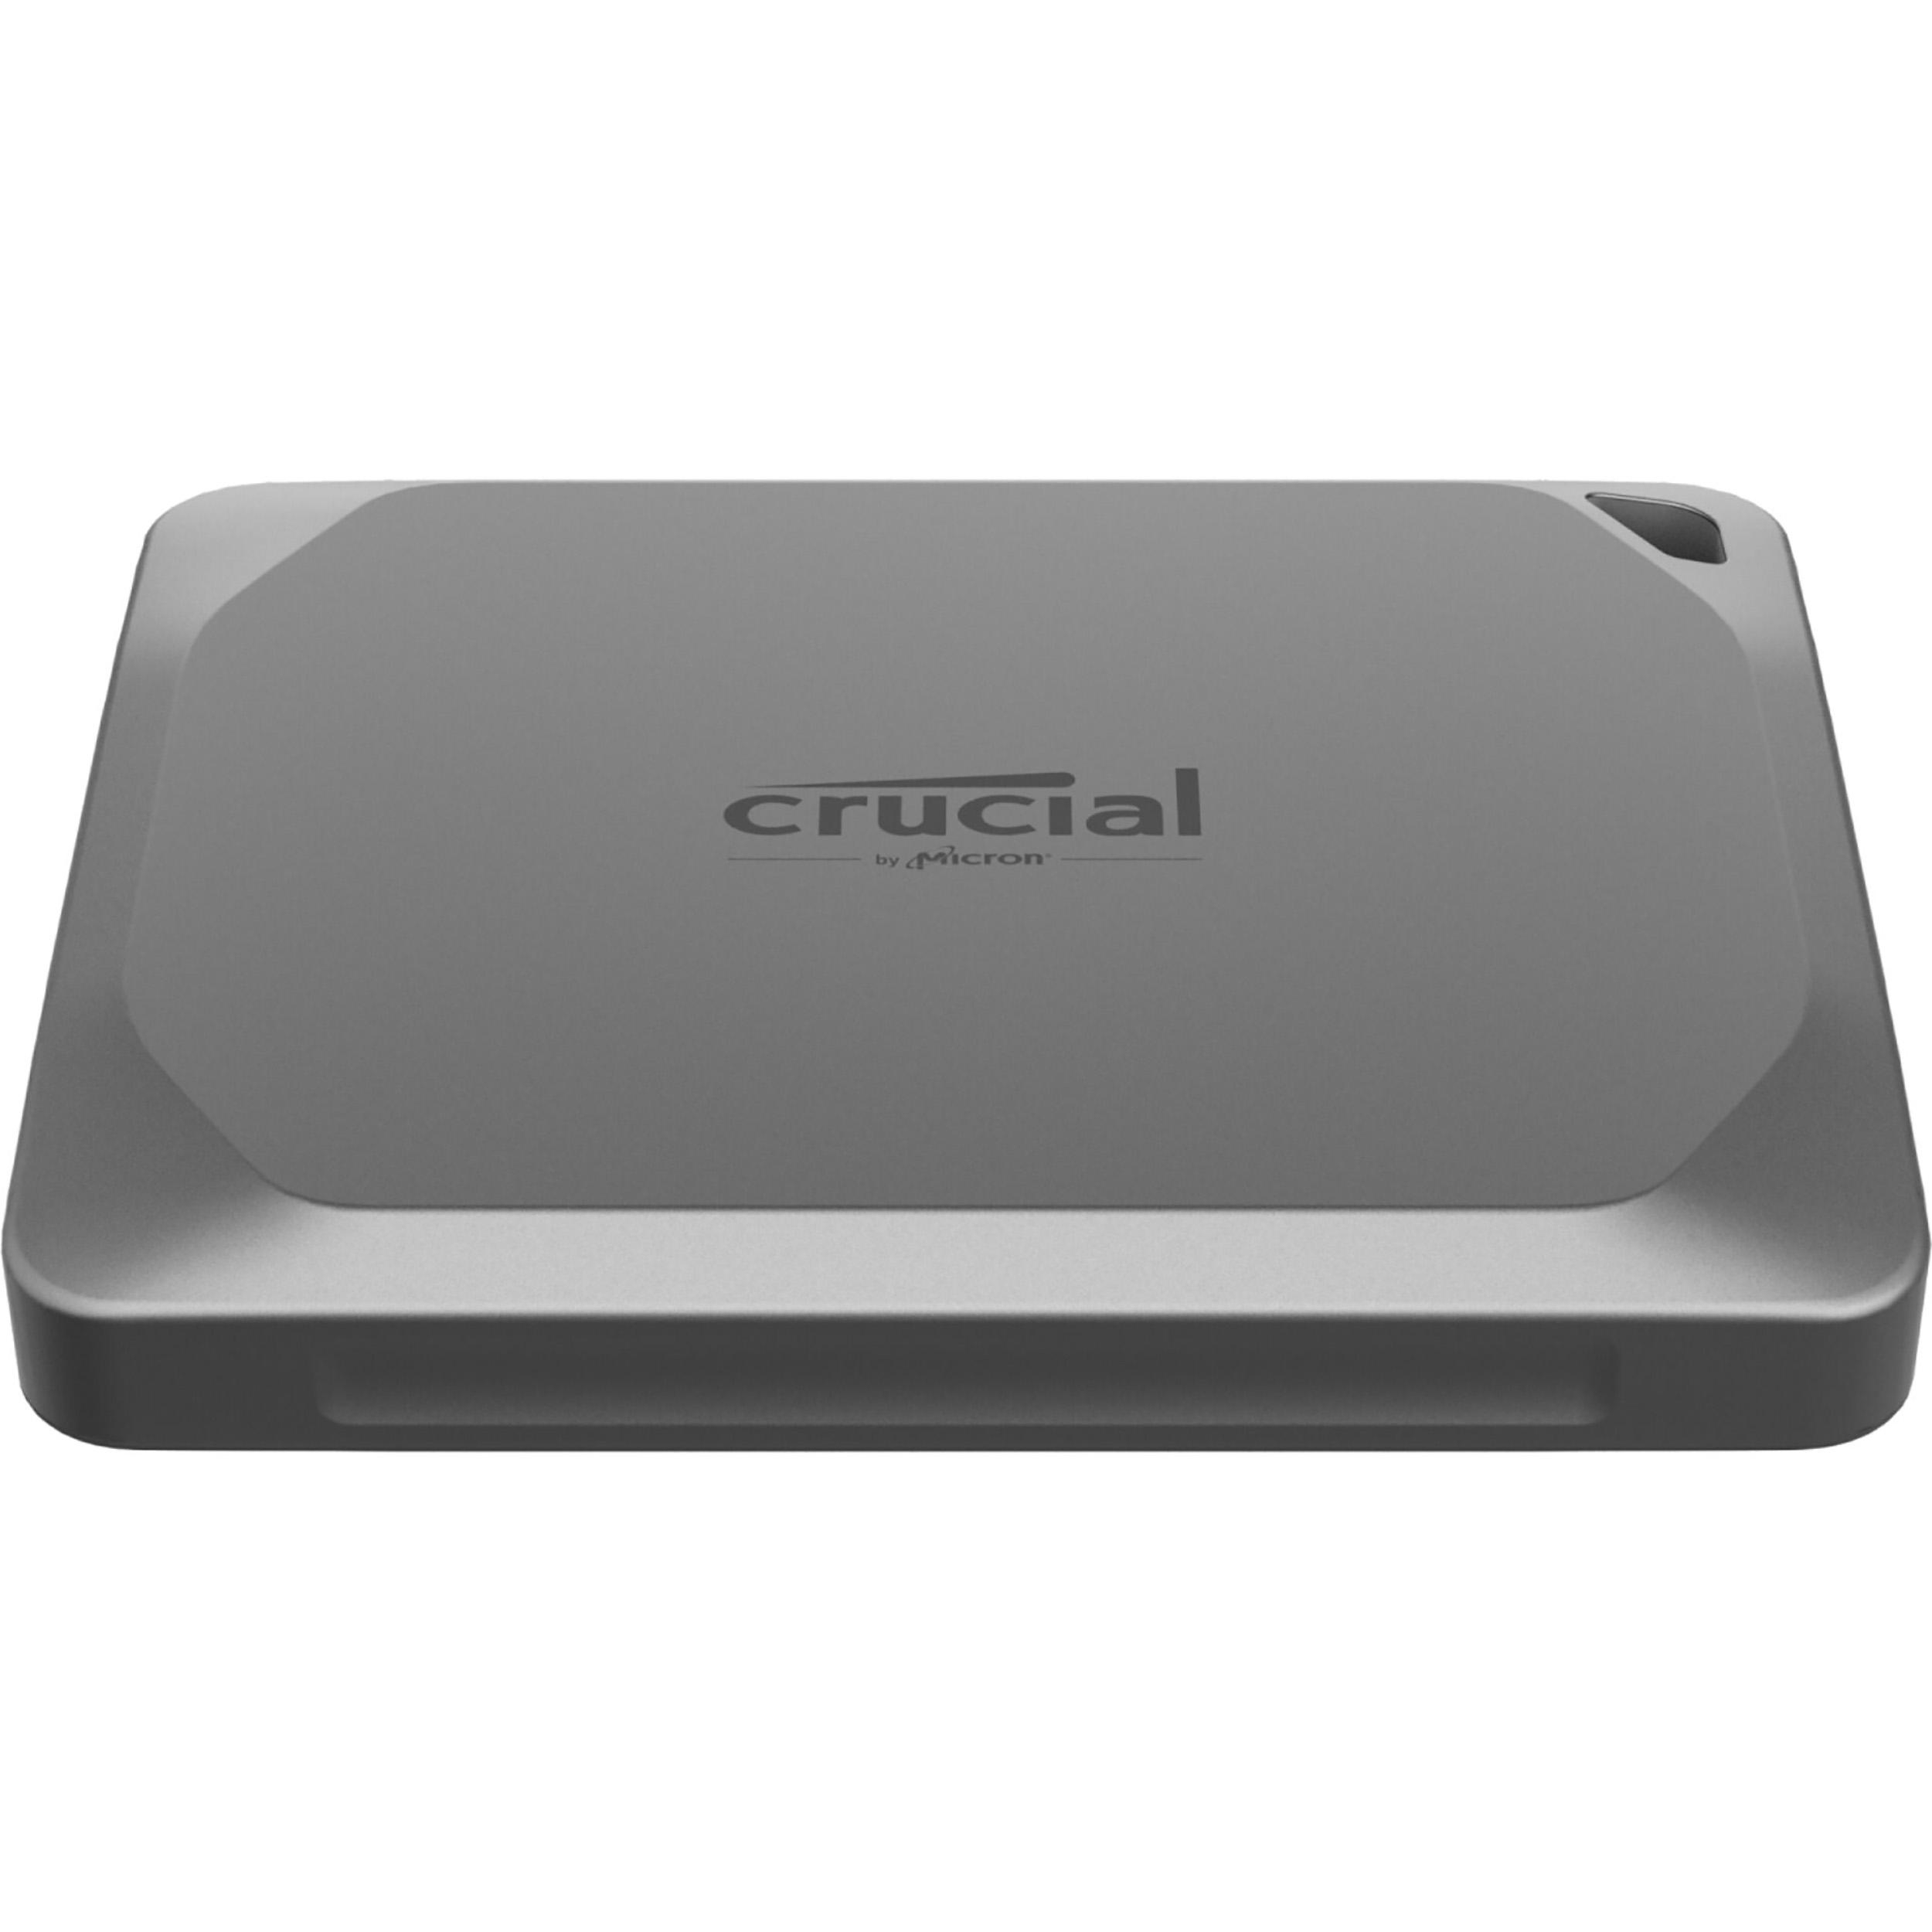 X9 CRUCIAL Pro extern, Festplatte, 2 SSD, TB Grau